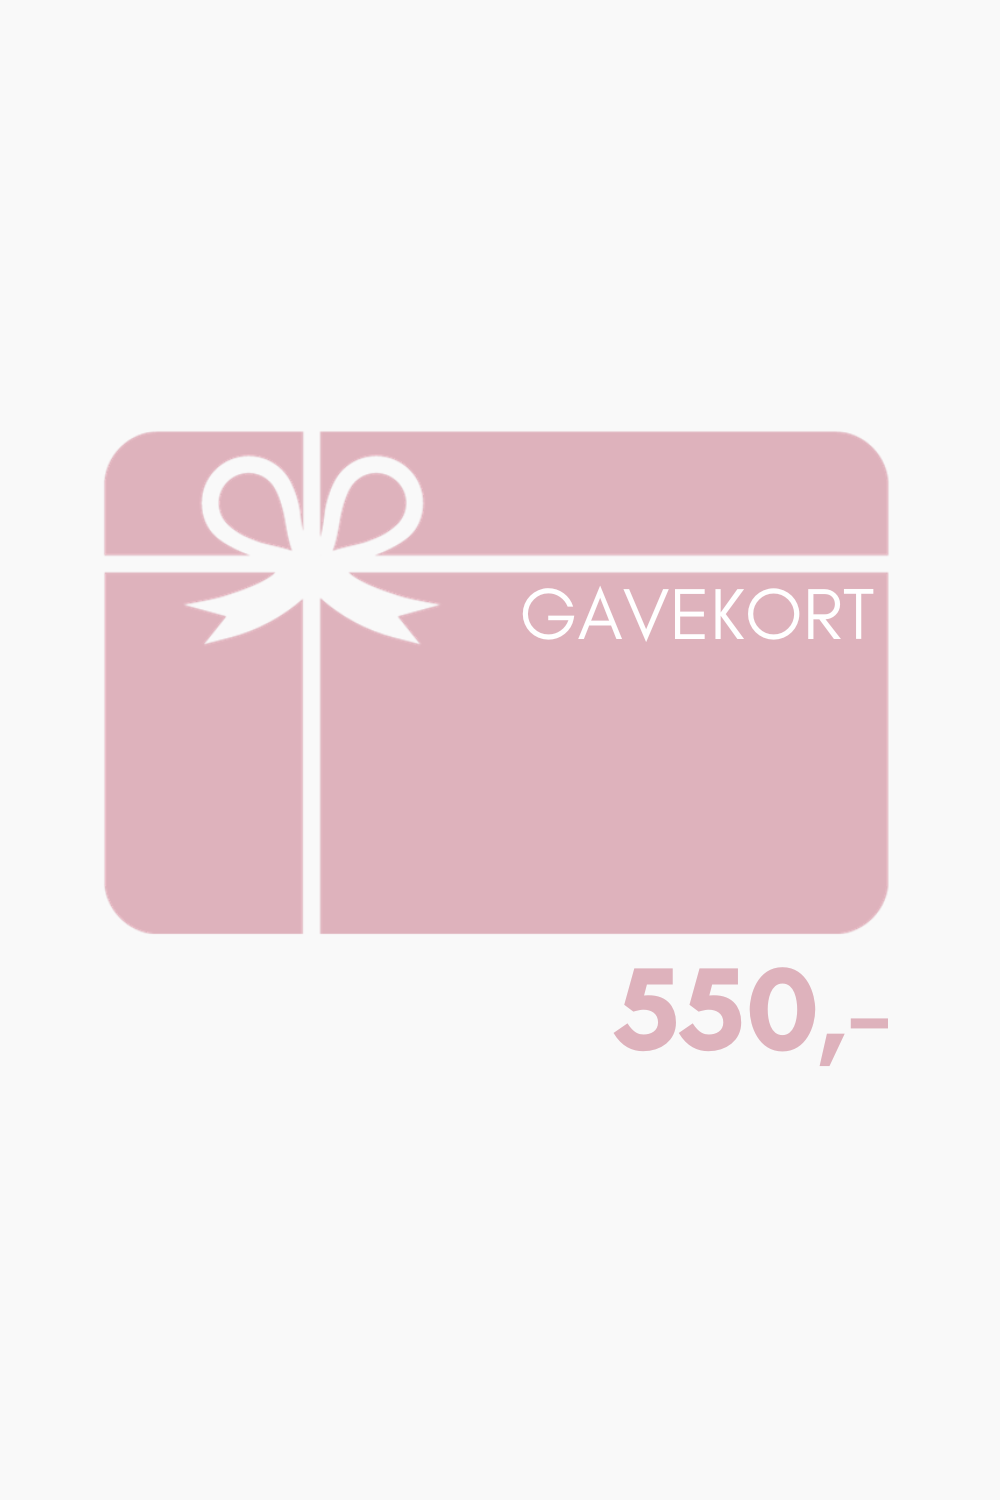 QNTS Gavekort 550 kr